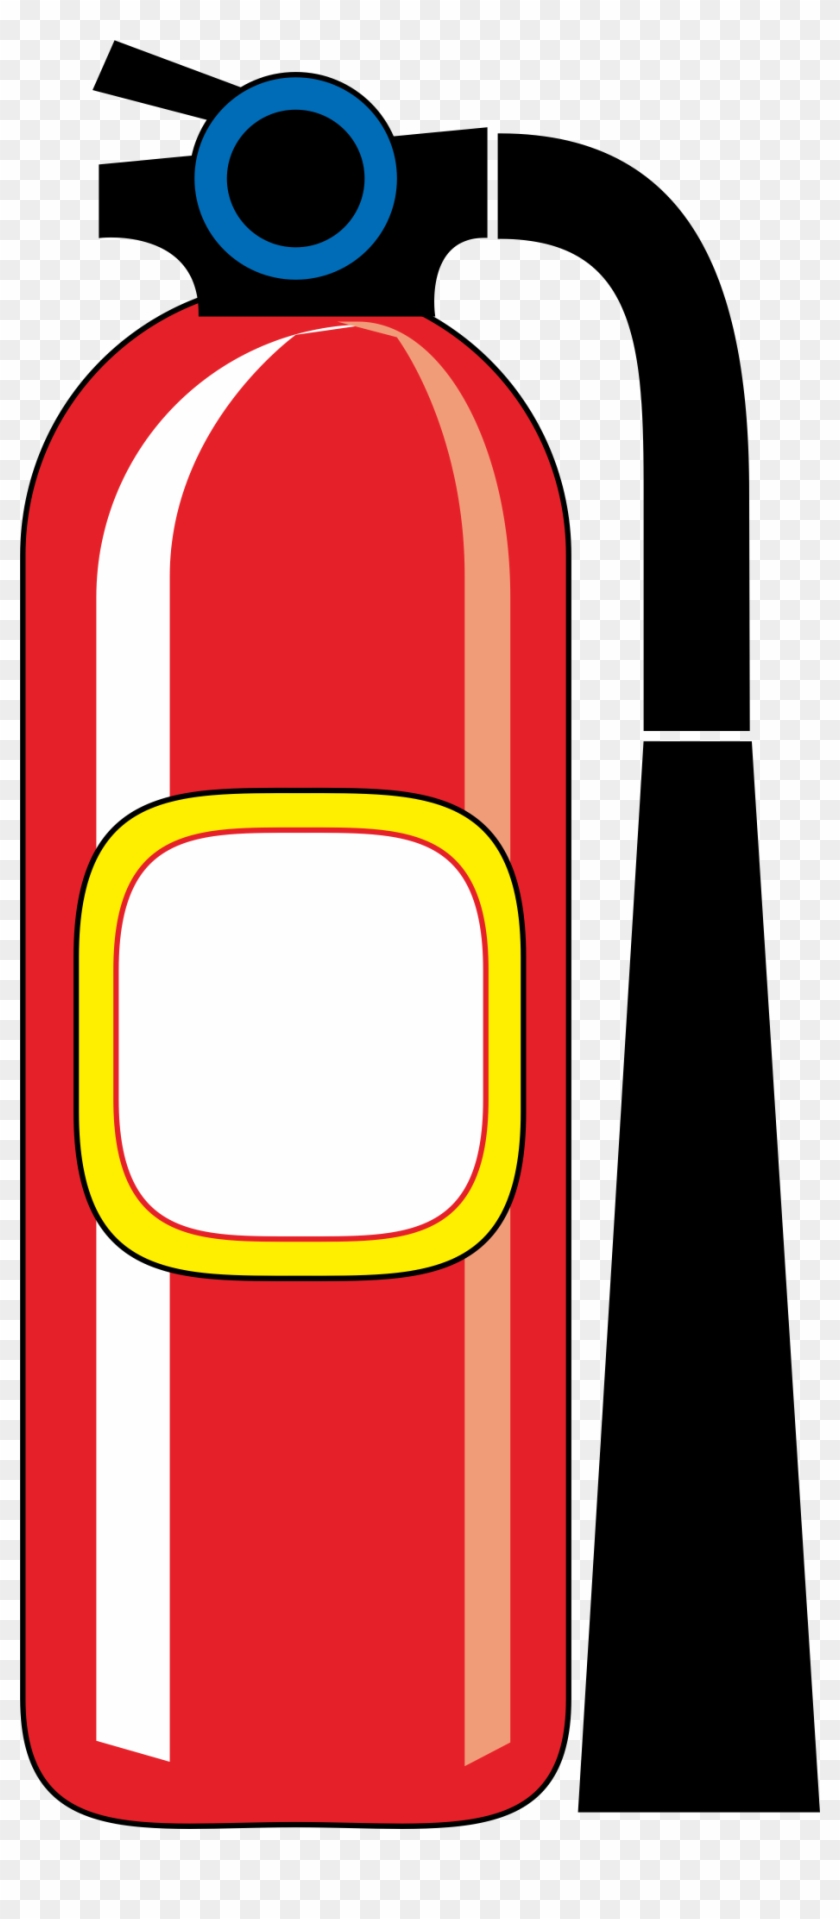 Fire Extinguisher Euclidean Vector Clip Art - Fire Extinguisher Euclidean Vector Clip Art #596059